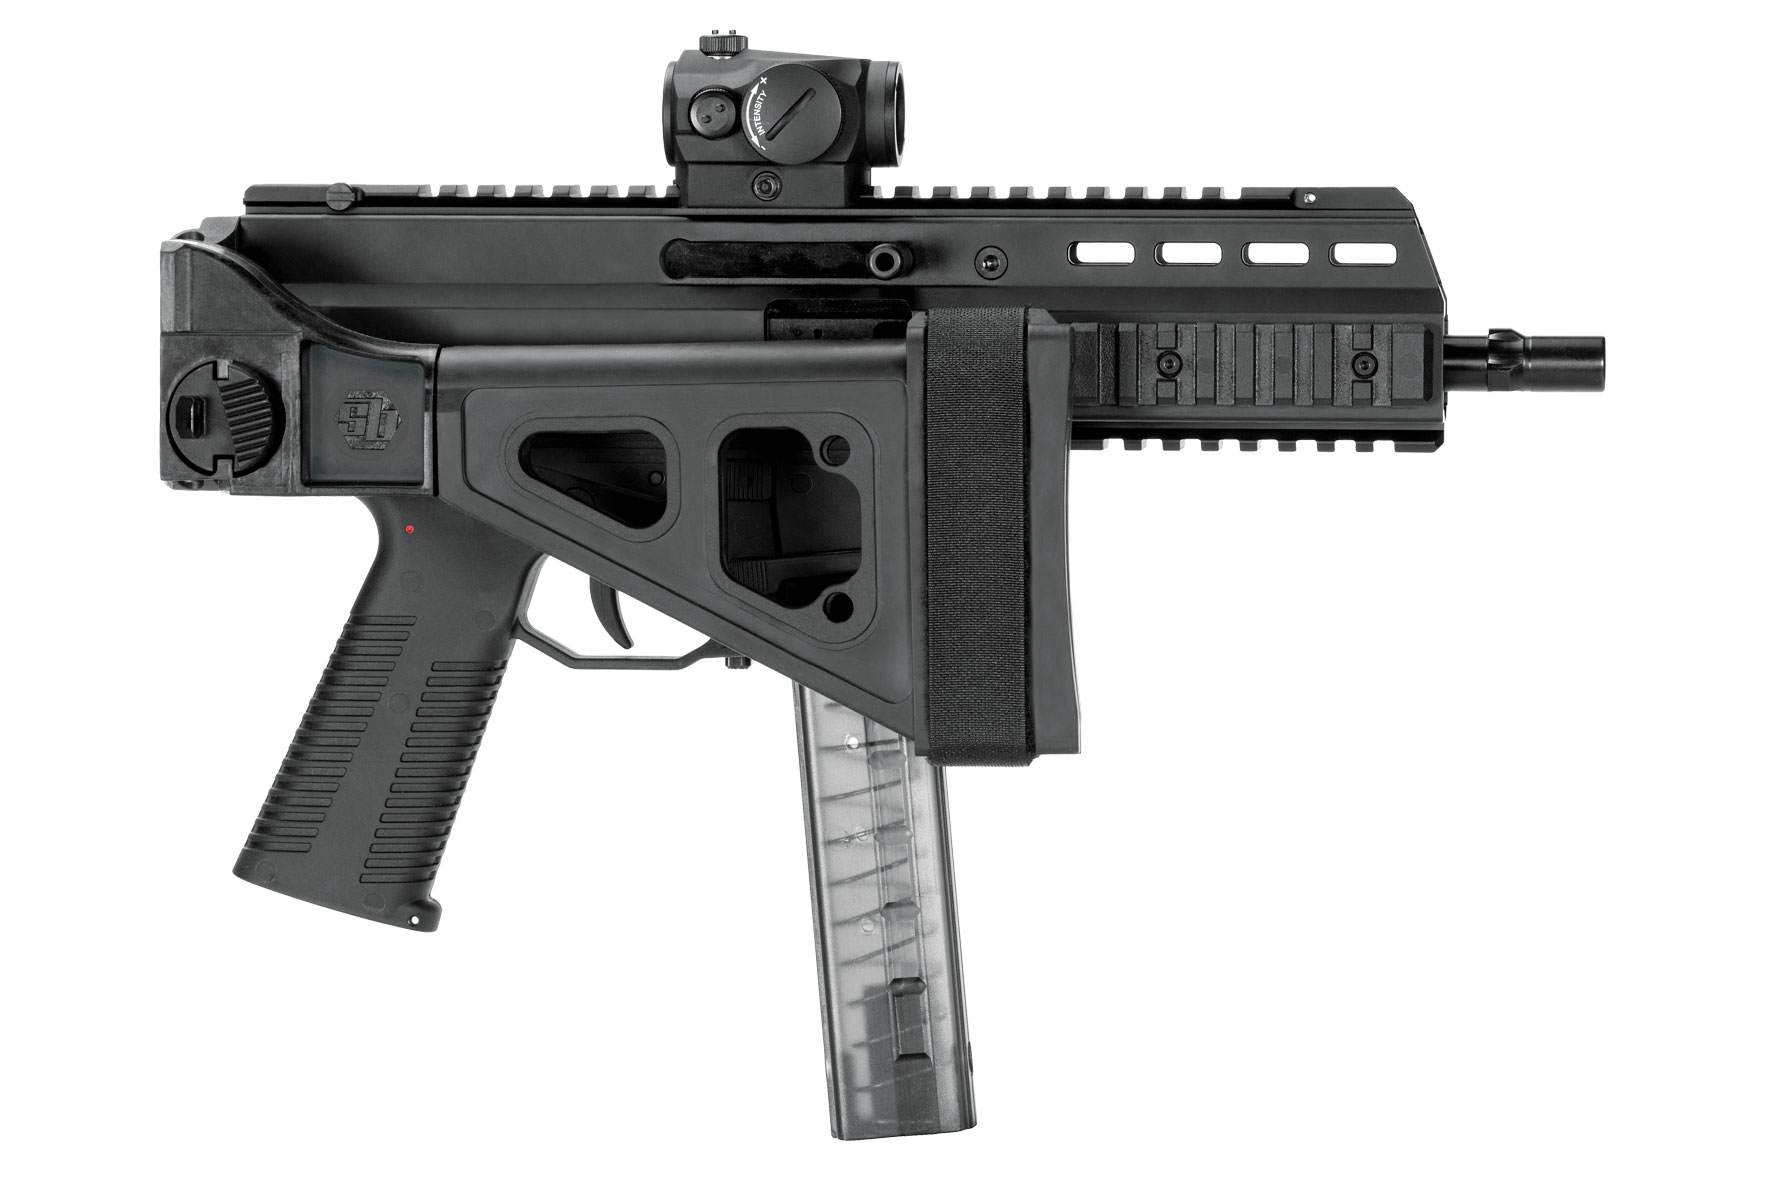 Tactical Sb Pistol Folding Sbt Apc Brace Stabilizing Hk Adjustable Strap Um...